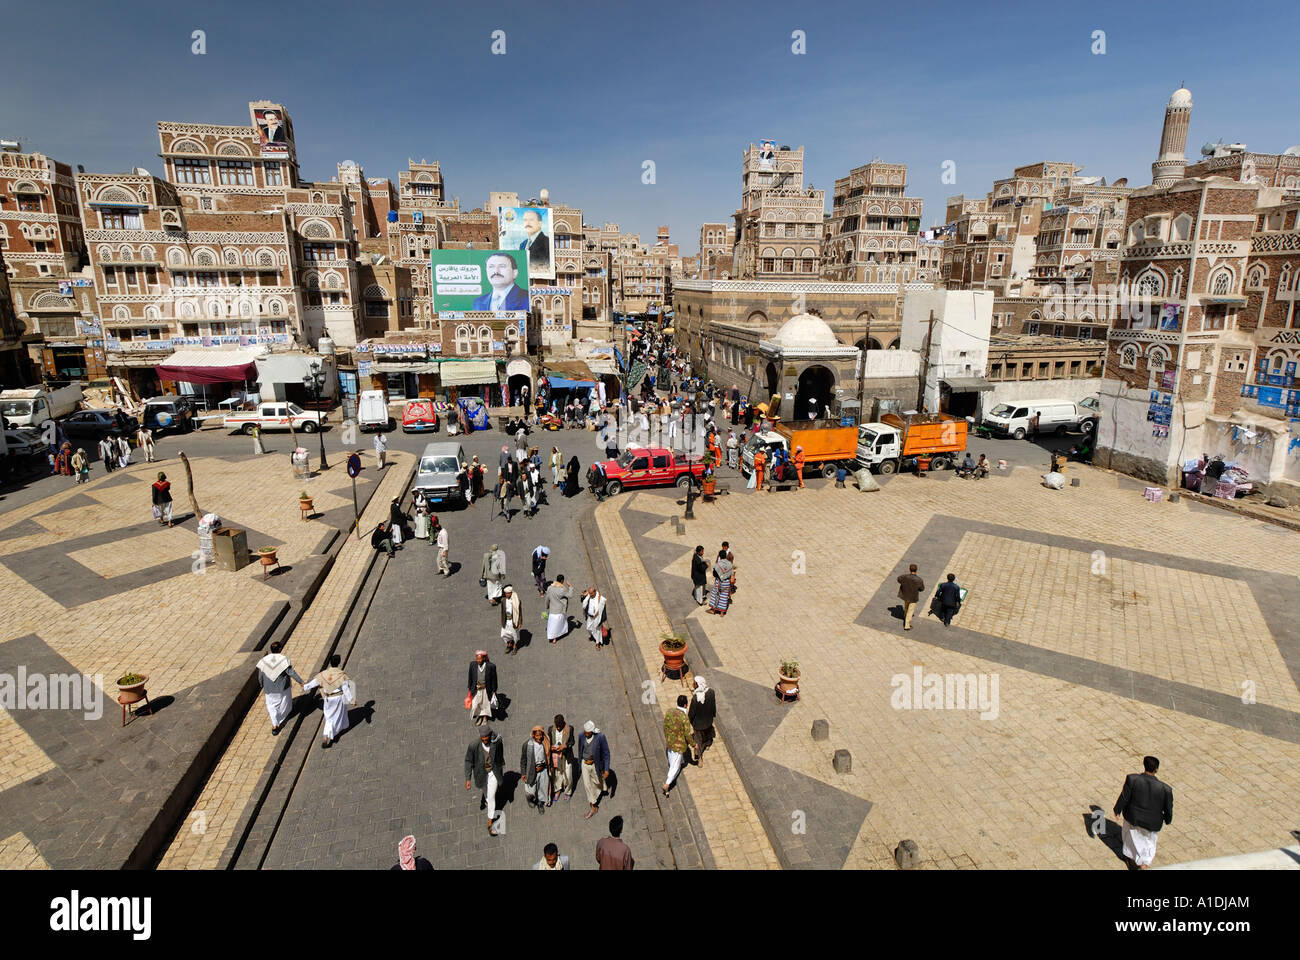 Chatten mit fremden in Sanaa